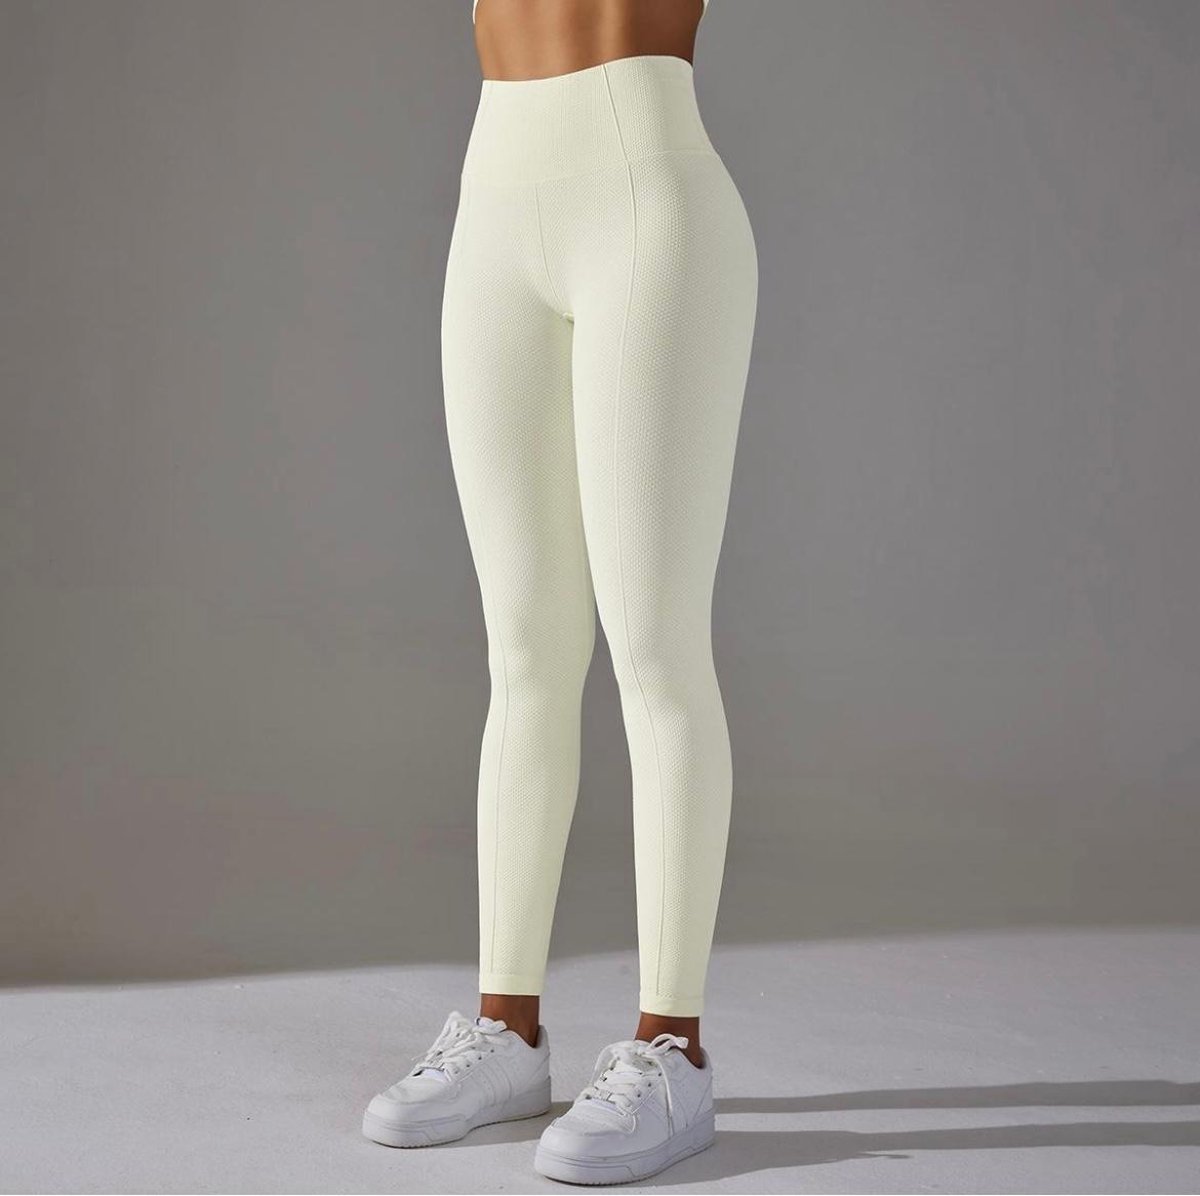 April Breeze Gym Legging - Maat S - Creme - Gymlegging - Sportlegging - Fitness legging - Yoga legging